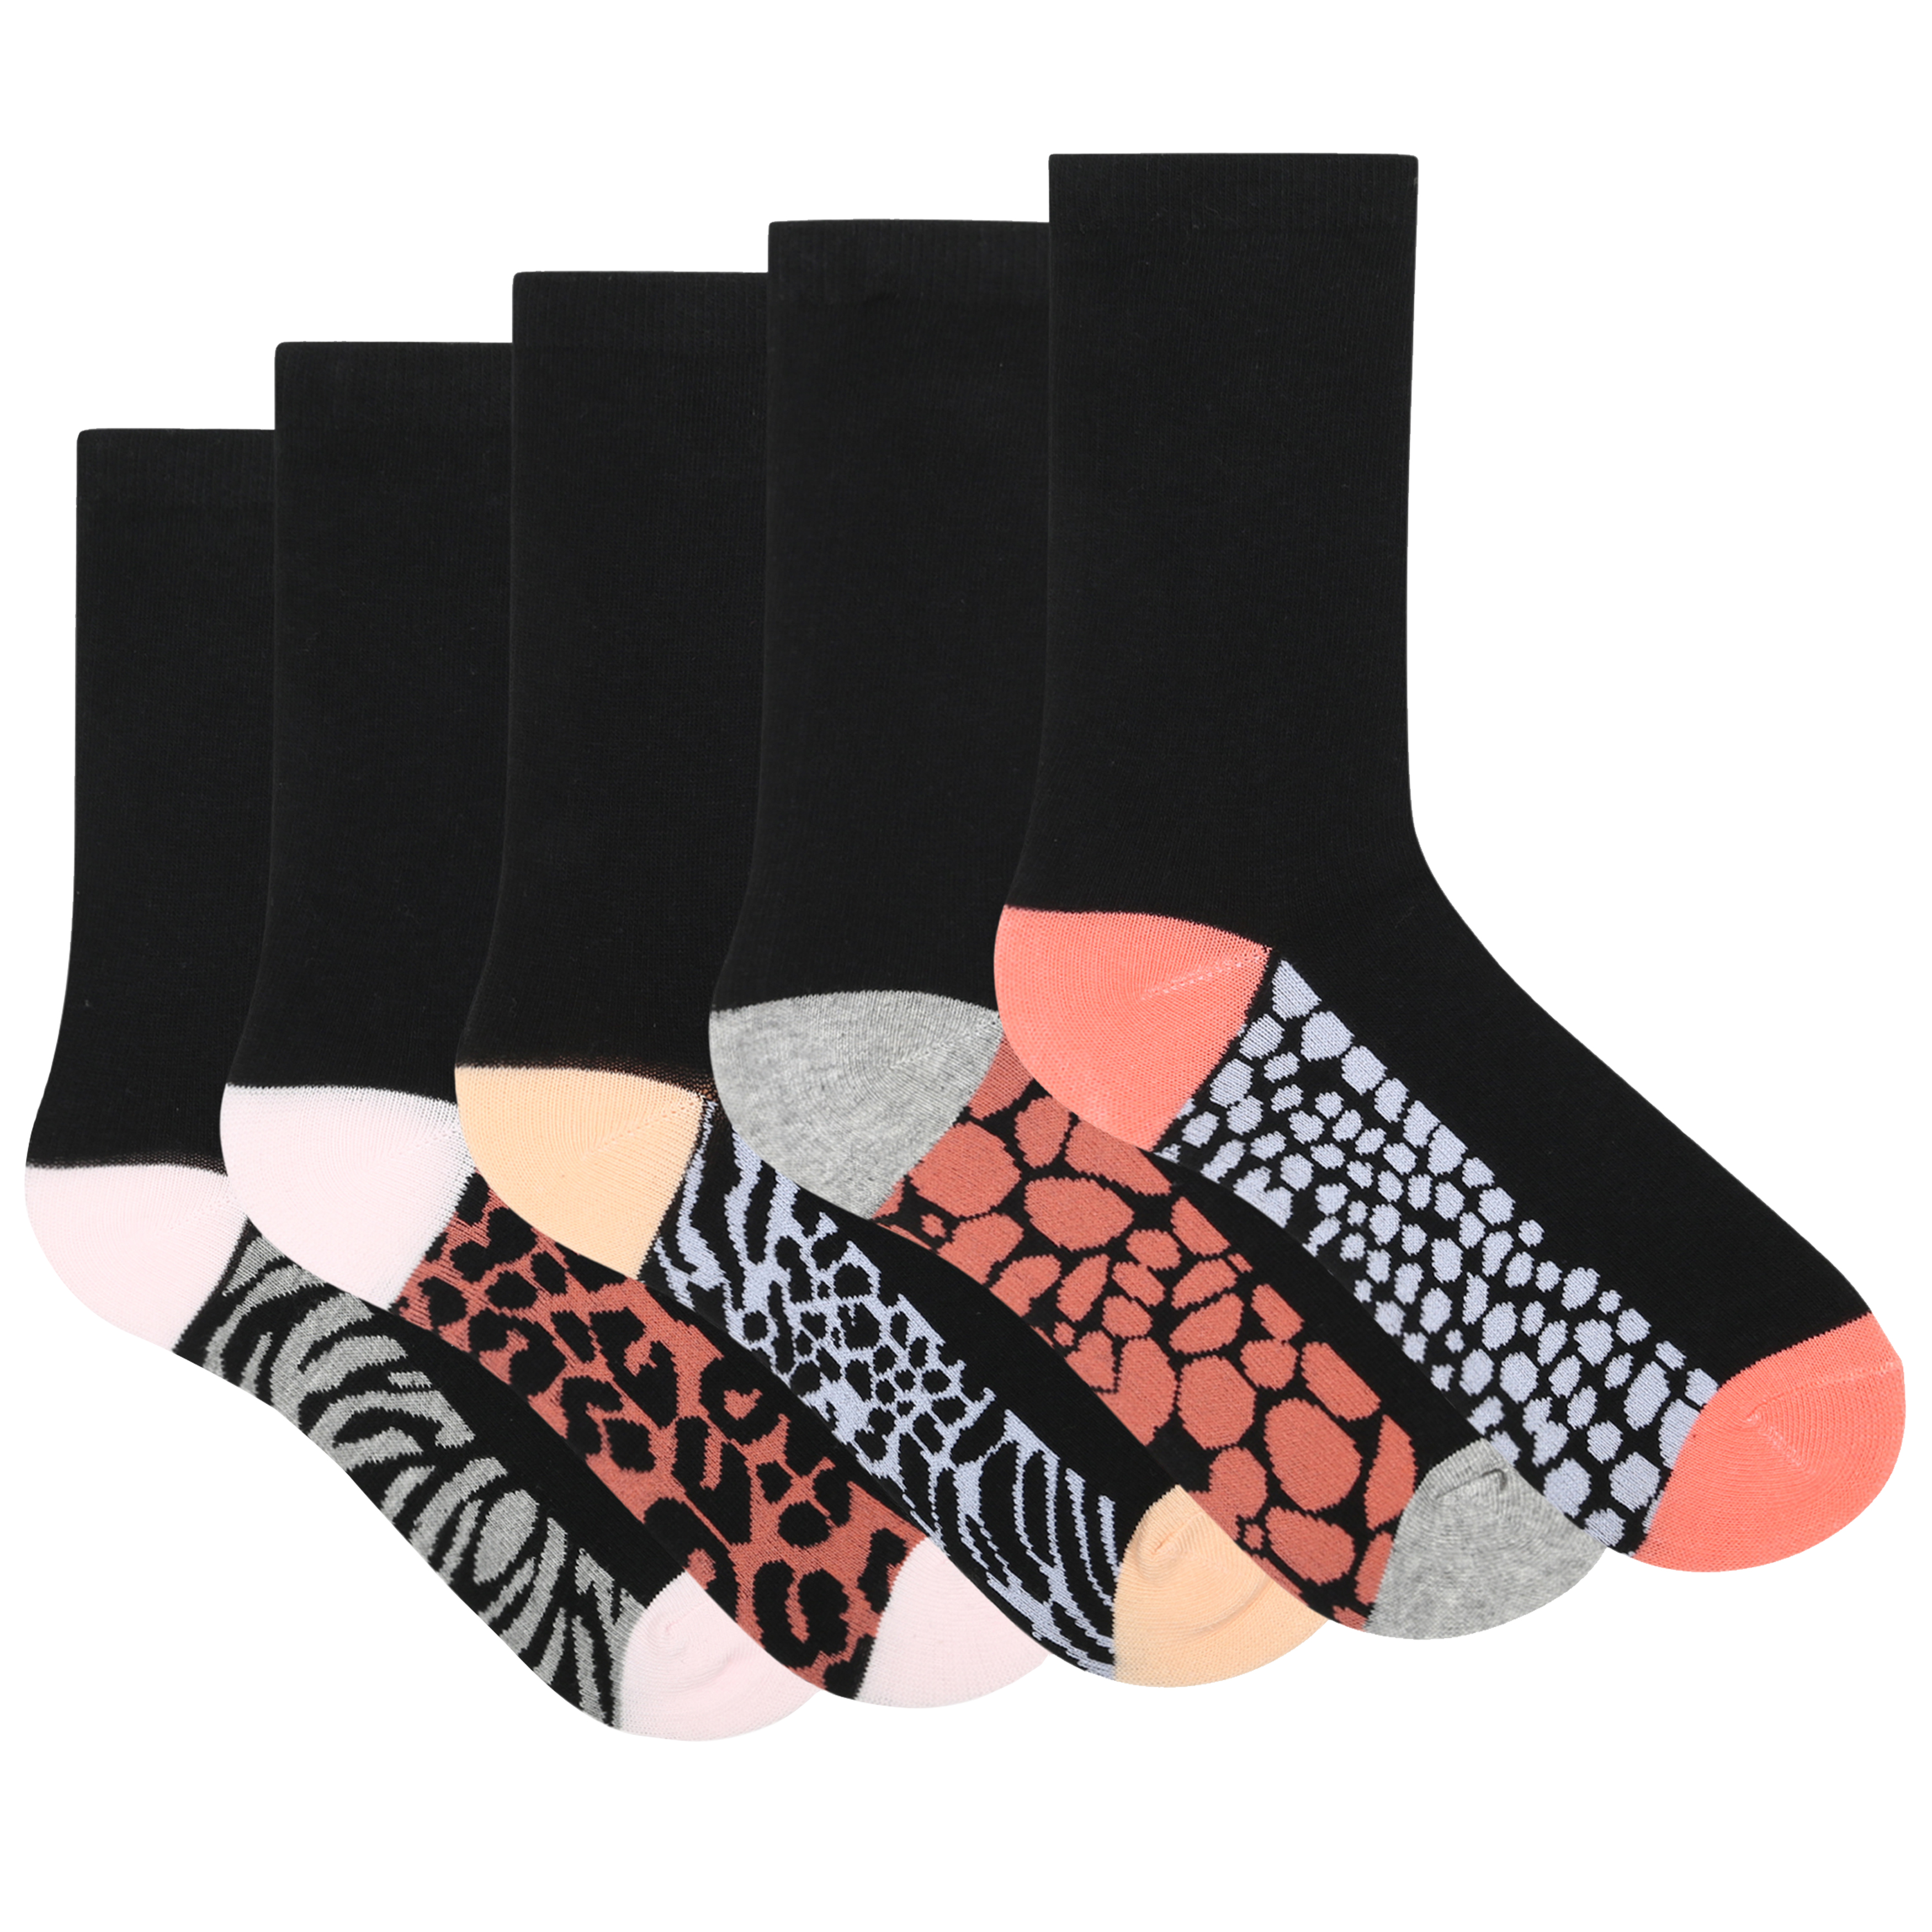 Ladies Plain Black Multi-Striped Cotton Rich Socks UK 4-8 EU 37-42 6 Pairs